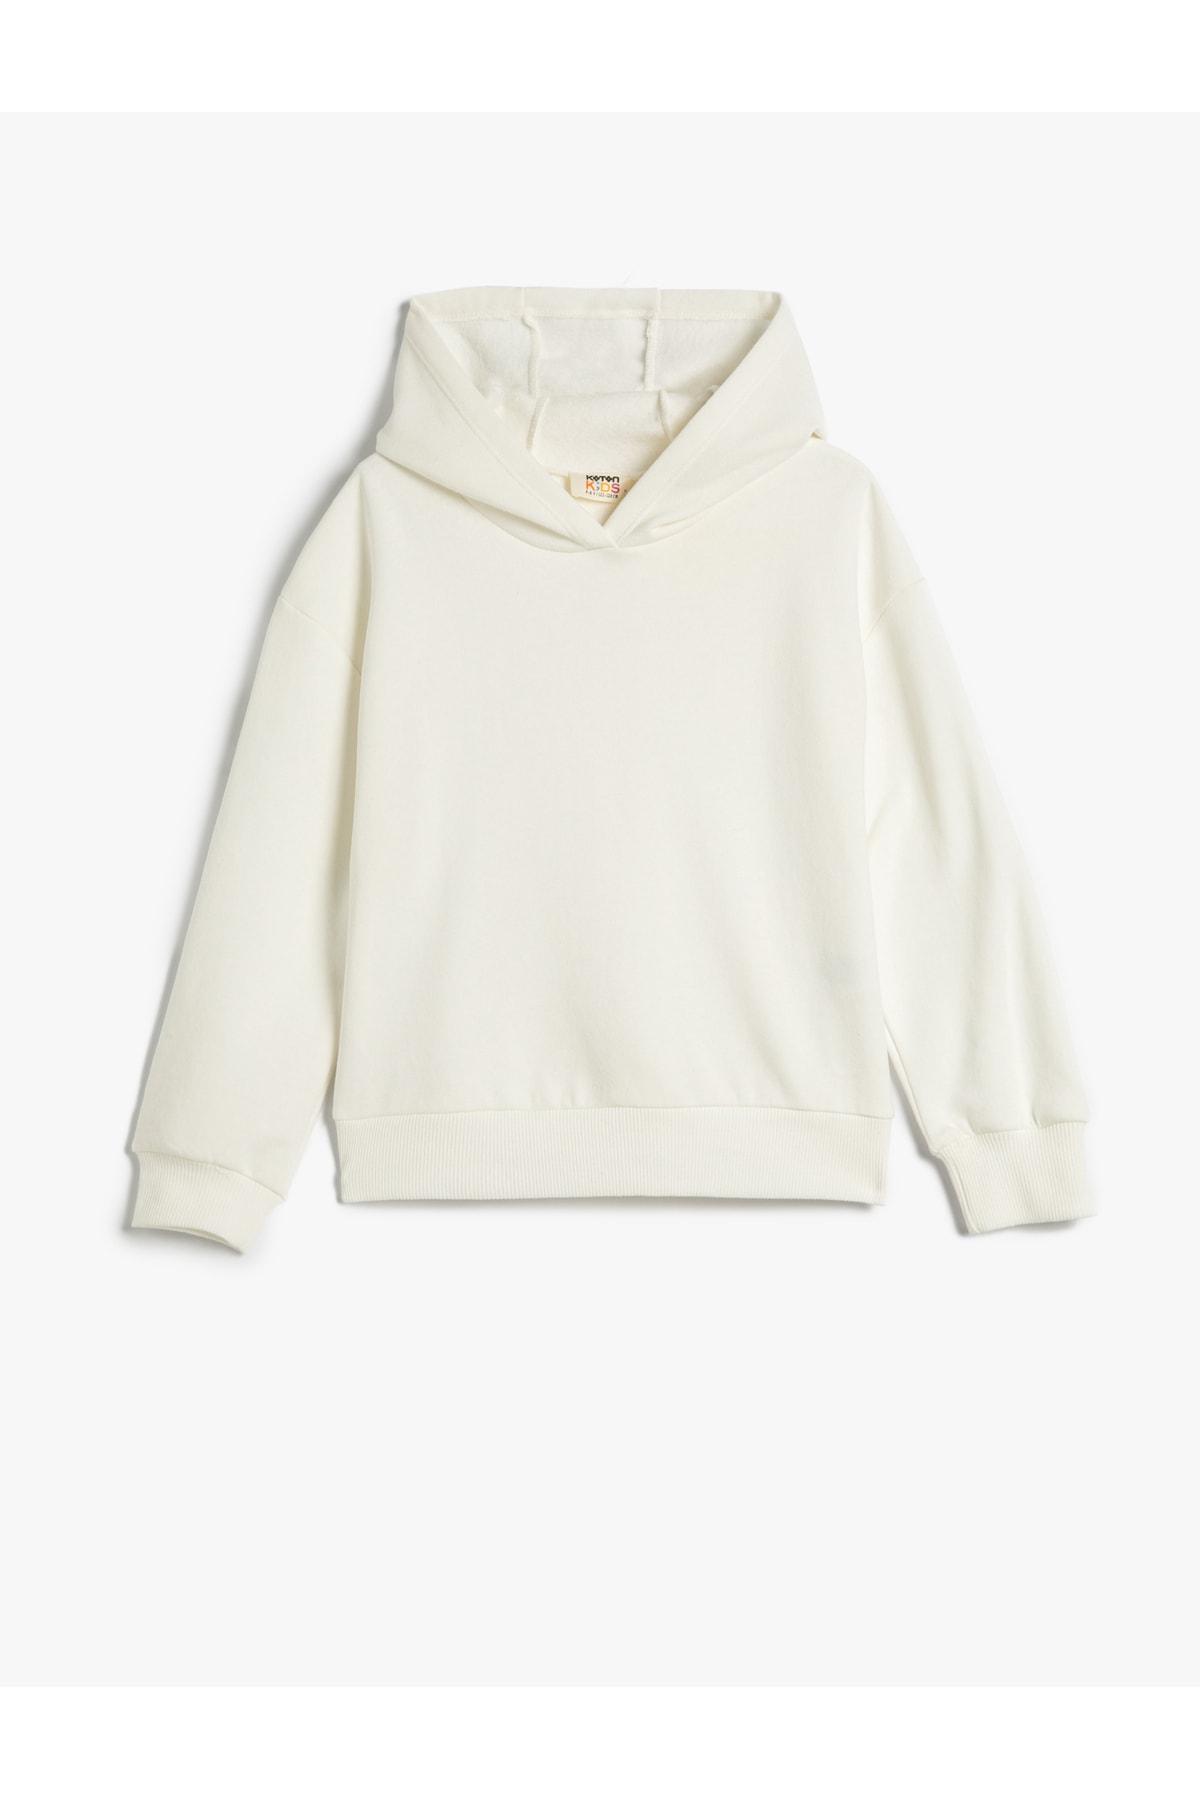 Koton Basic Hooded Sweatshirt Long Sleeve Cotton Blend